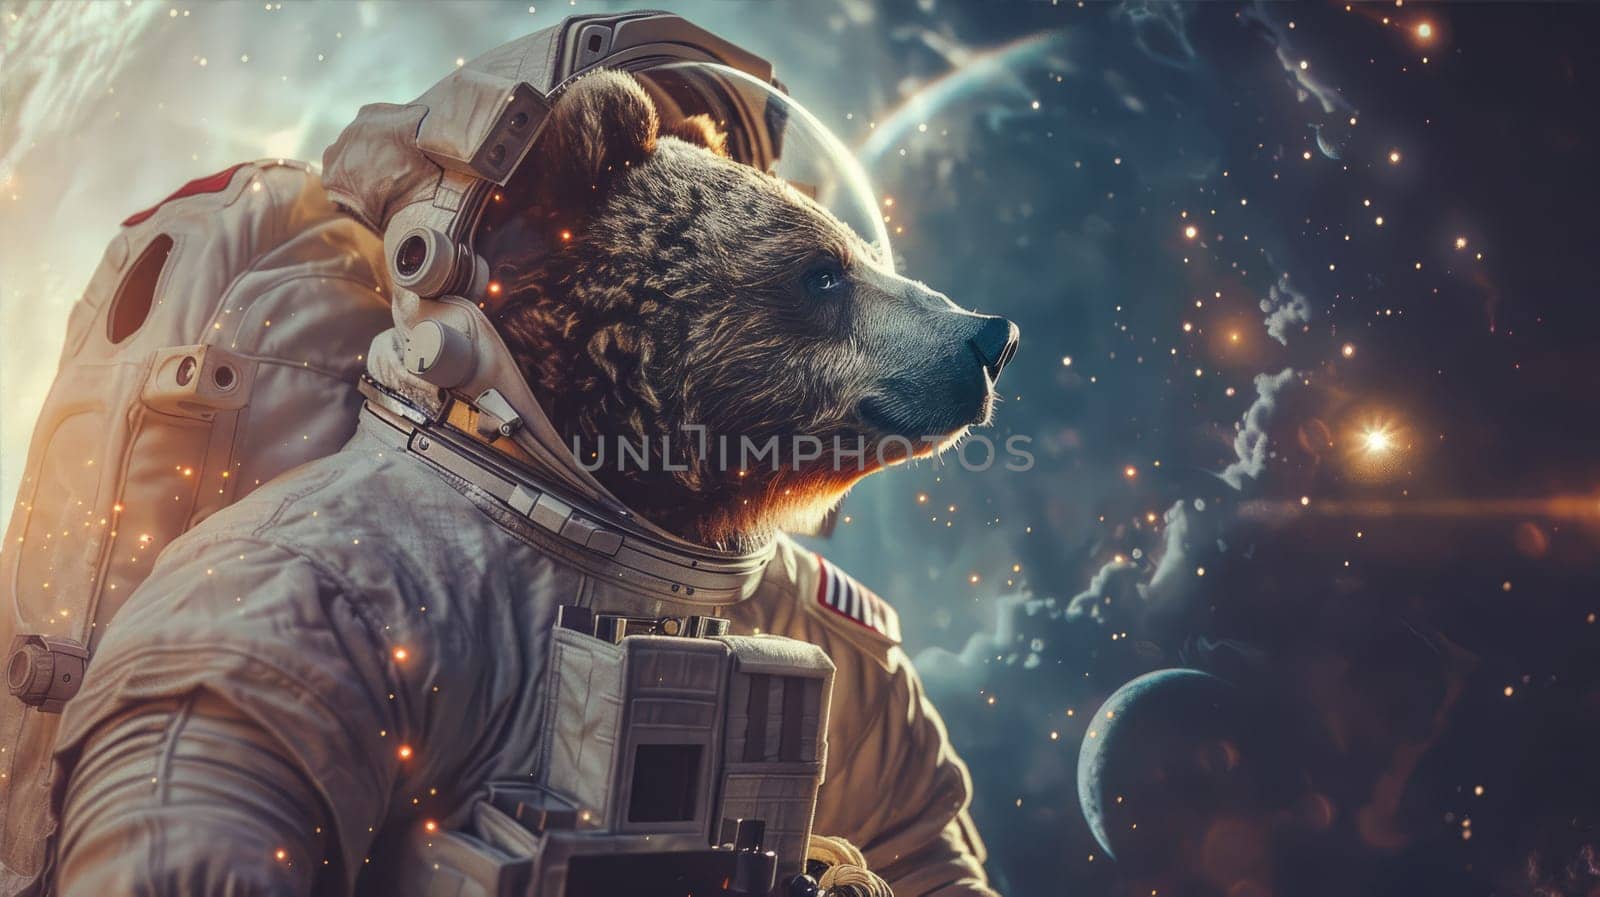 A bear travels through space like an astronaut AI